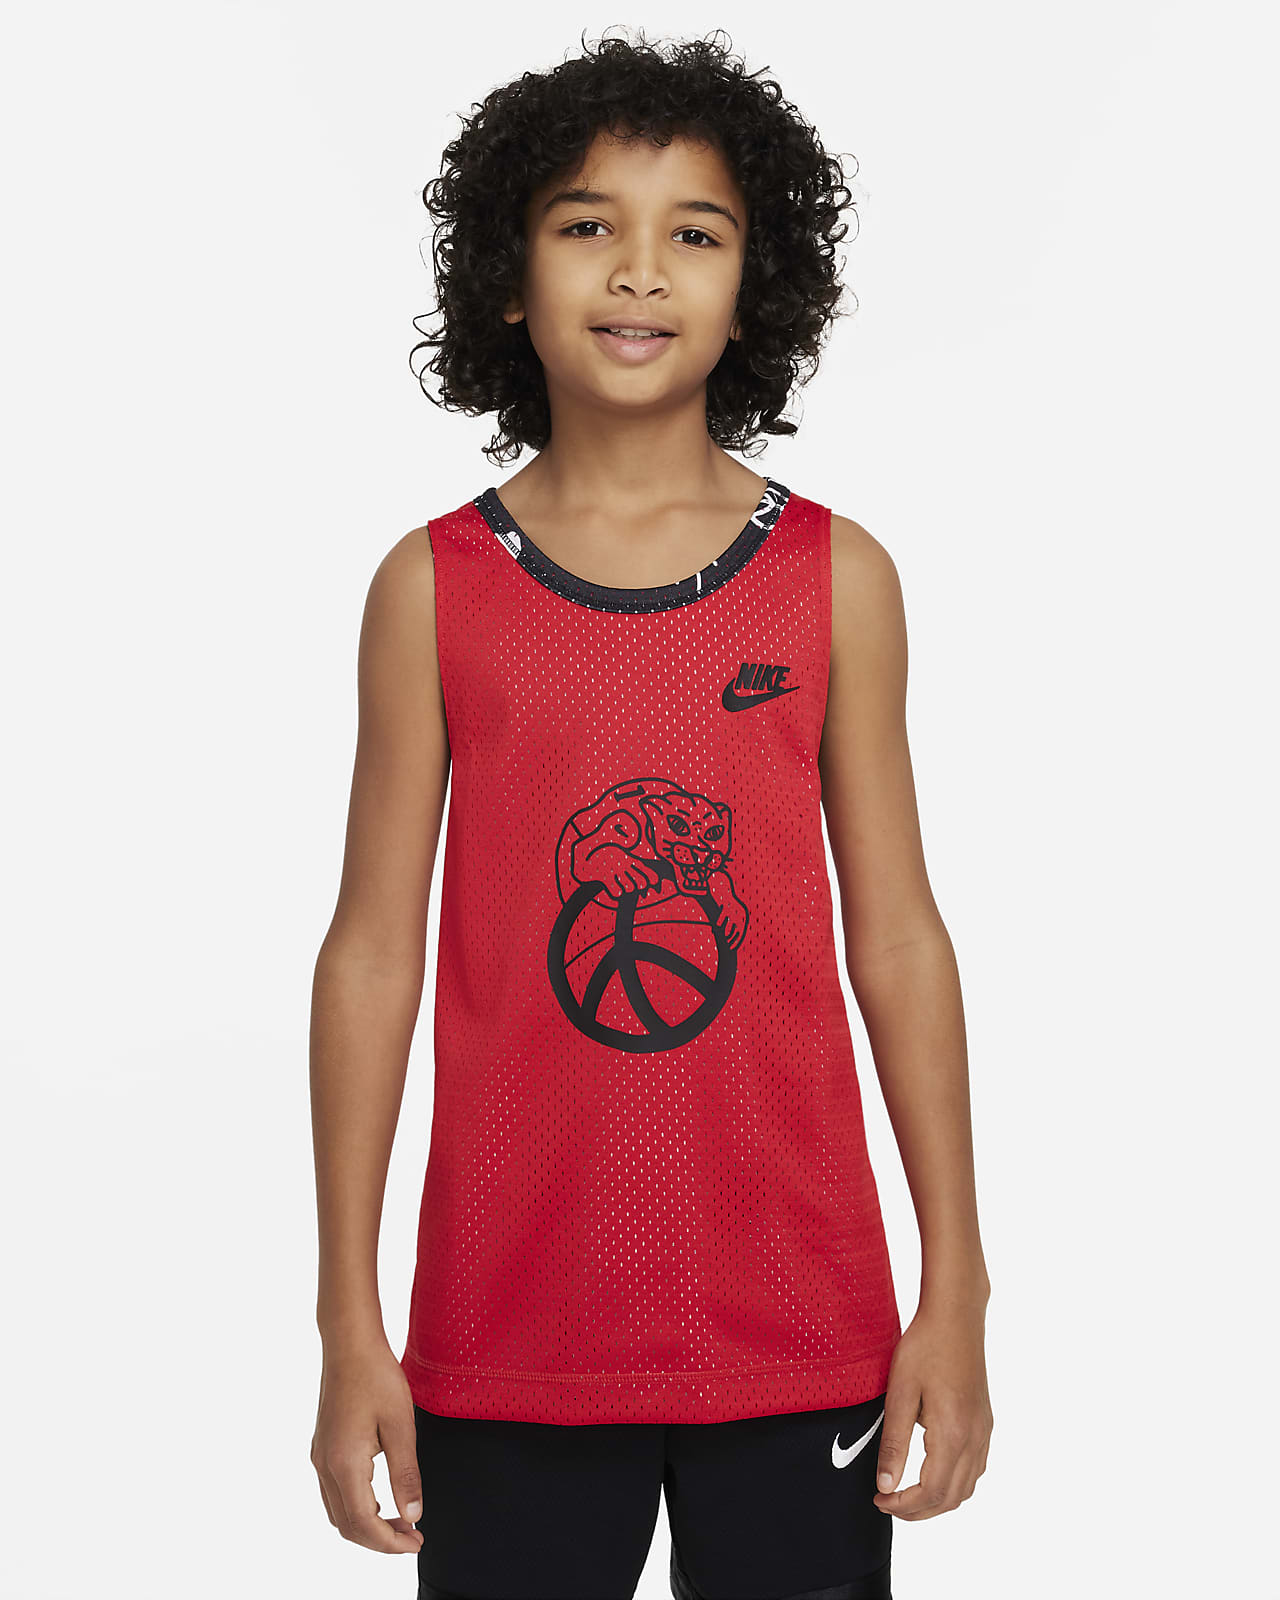 Nike Culture of Basketball Older Kids' (Boys') Reversible Basketball Jersey